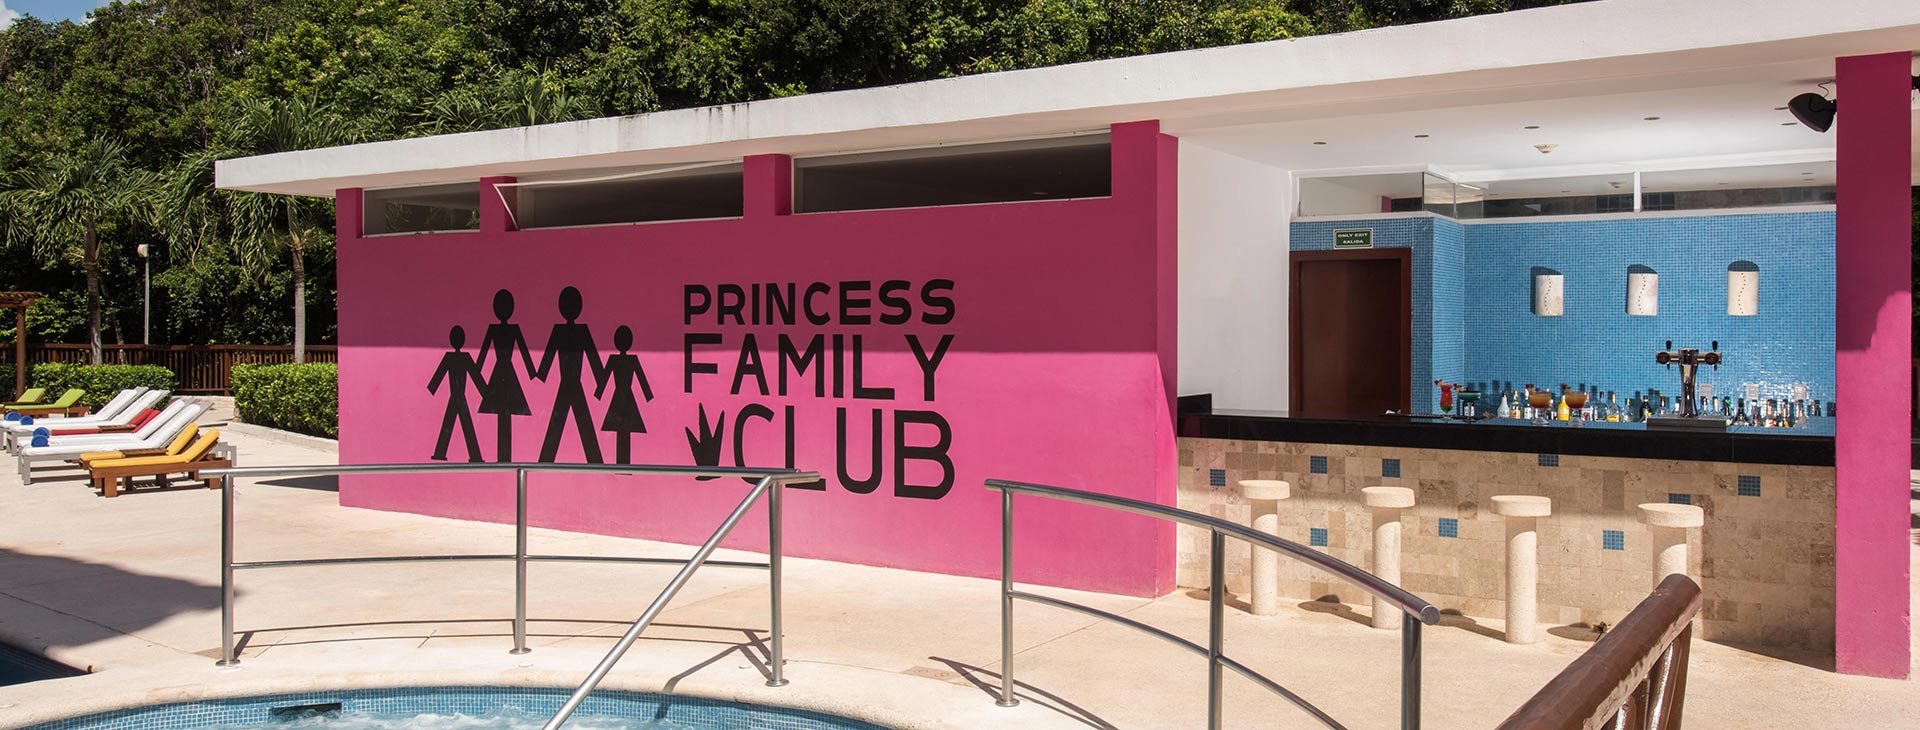 Family Club Princess Obrázek3